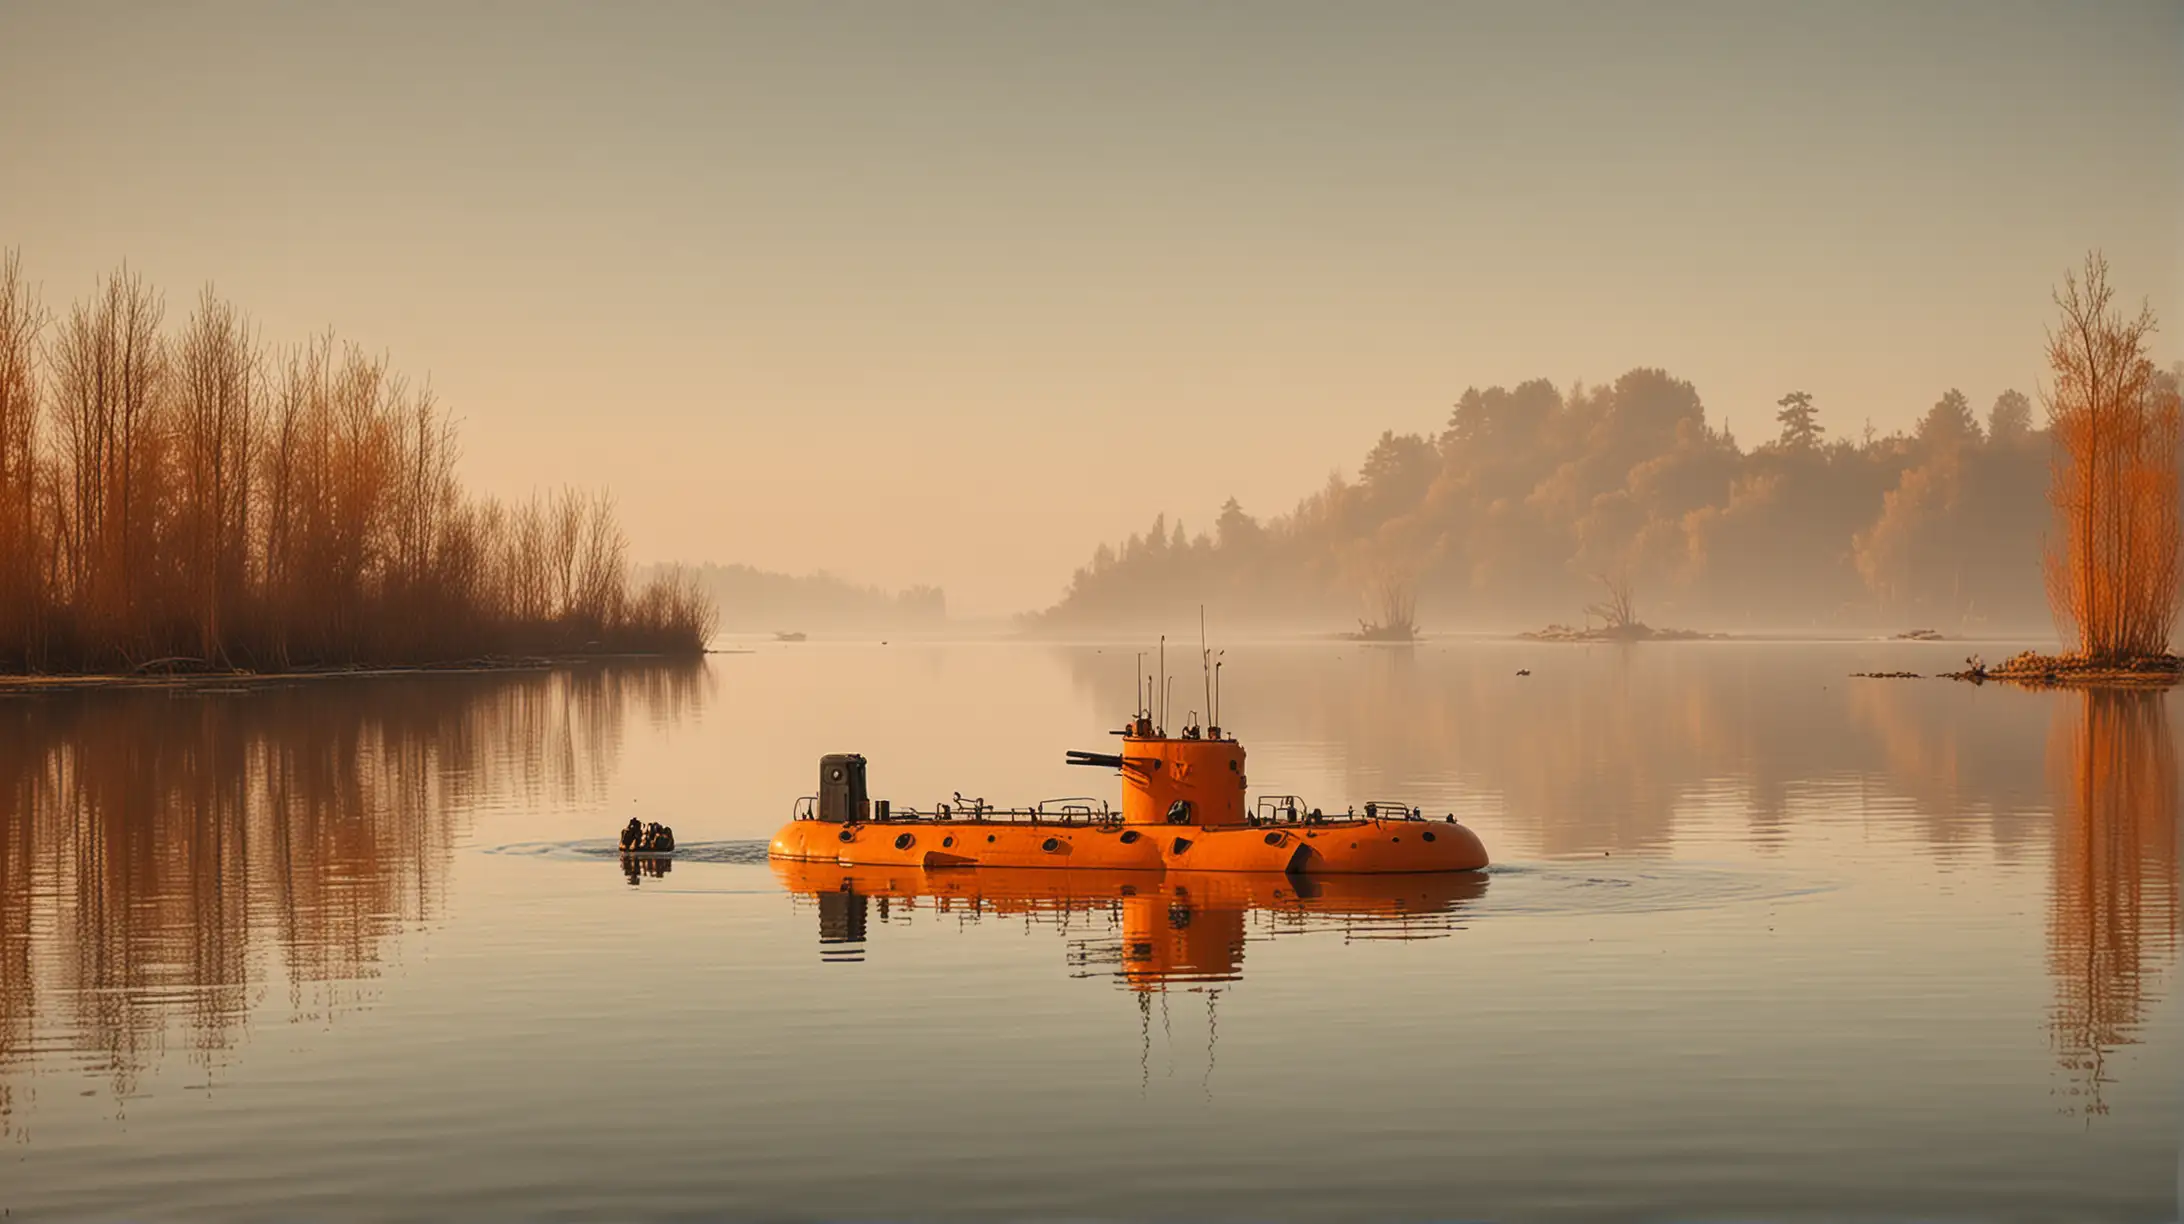 Mystical Lake with Three Islands Submarine Exploration in Orange Atmosphere